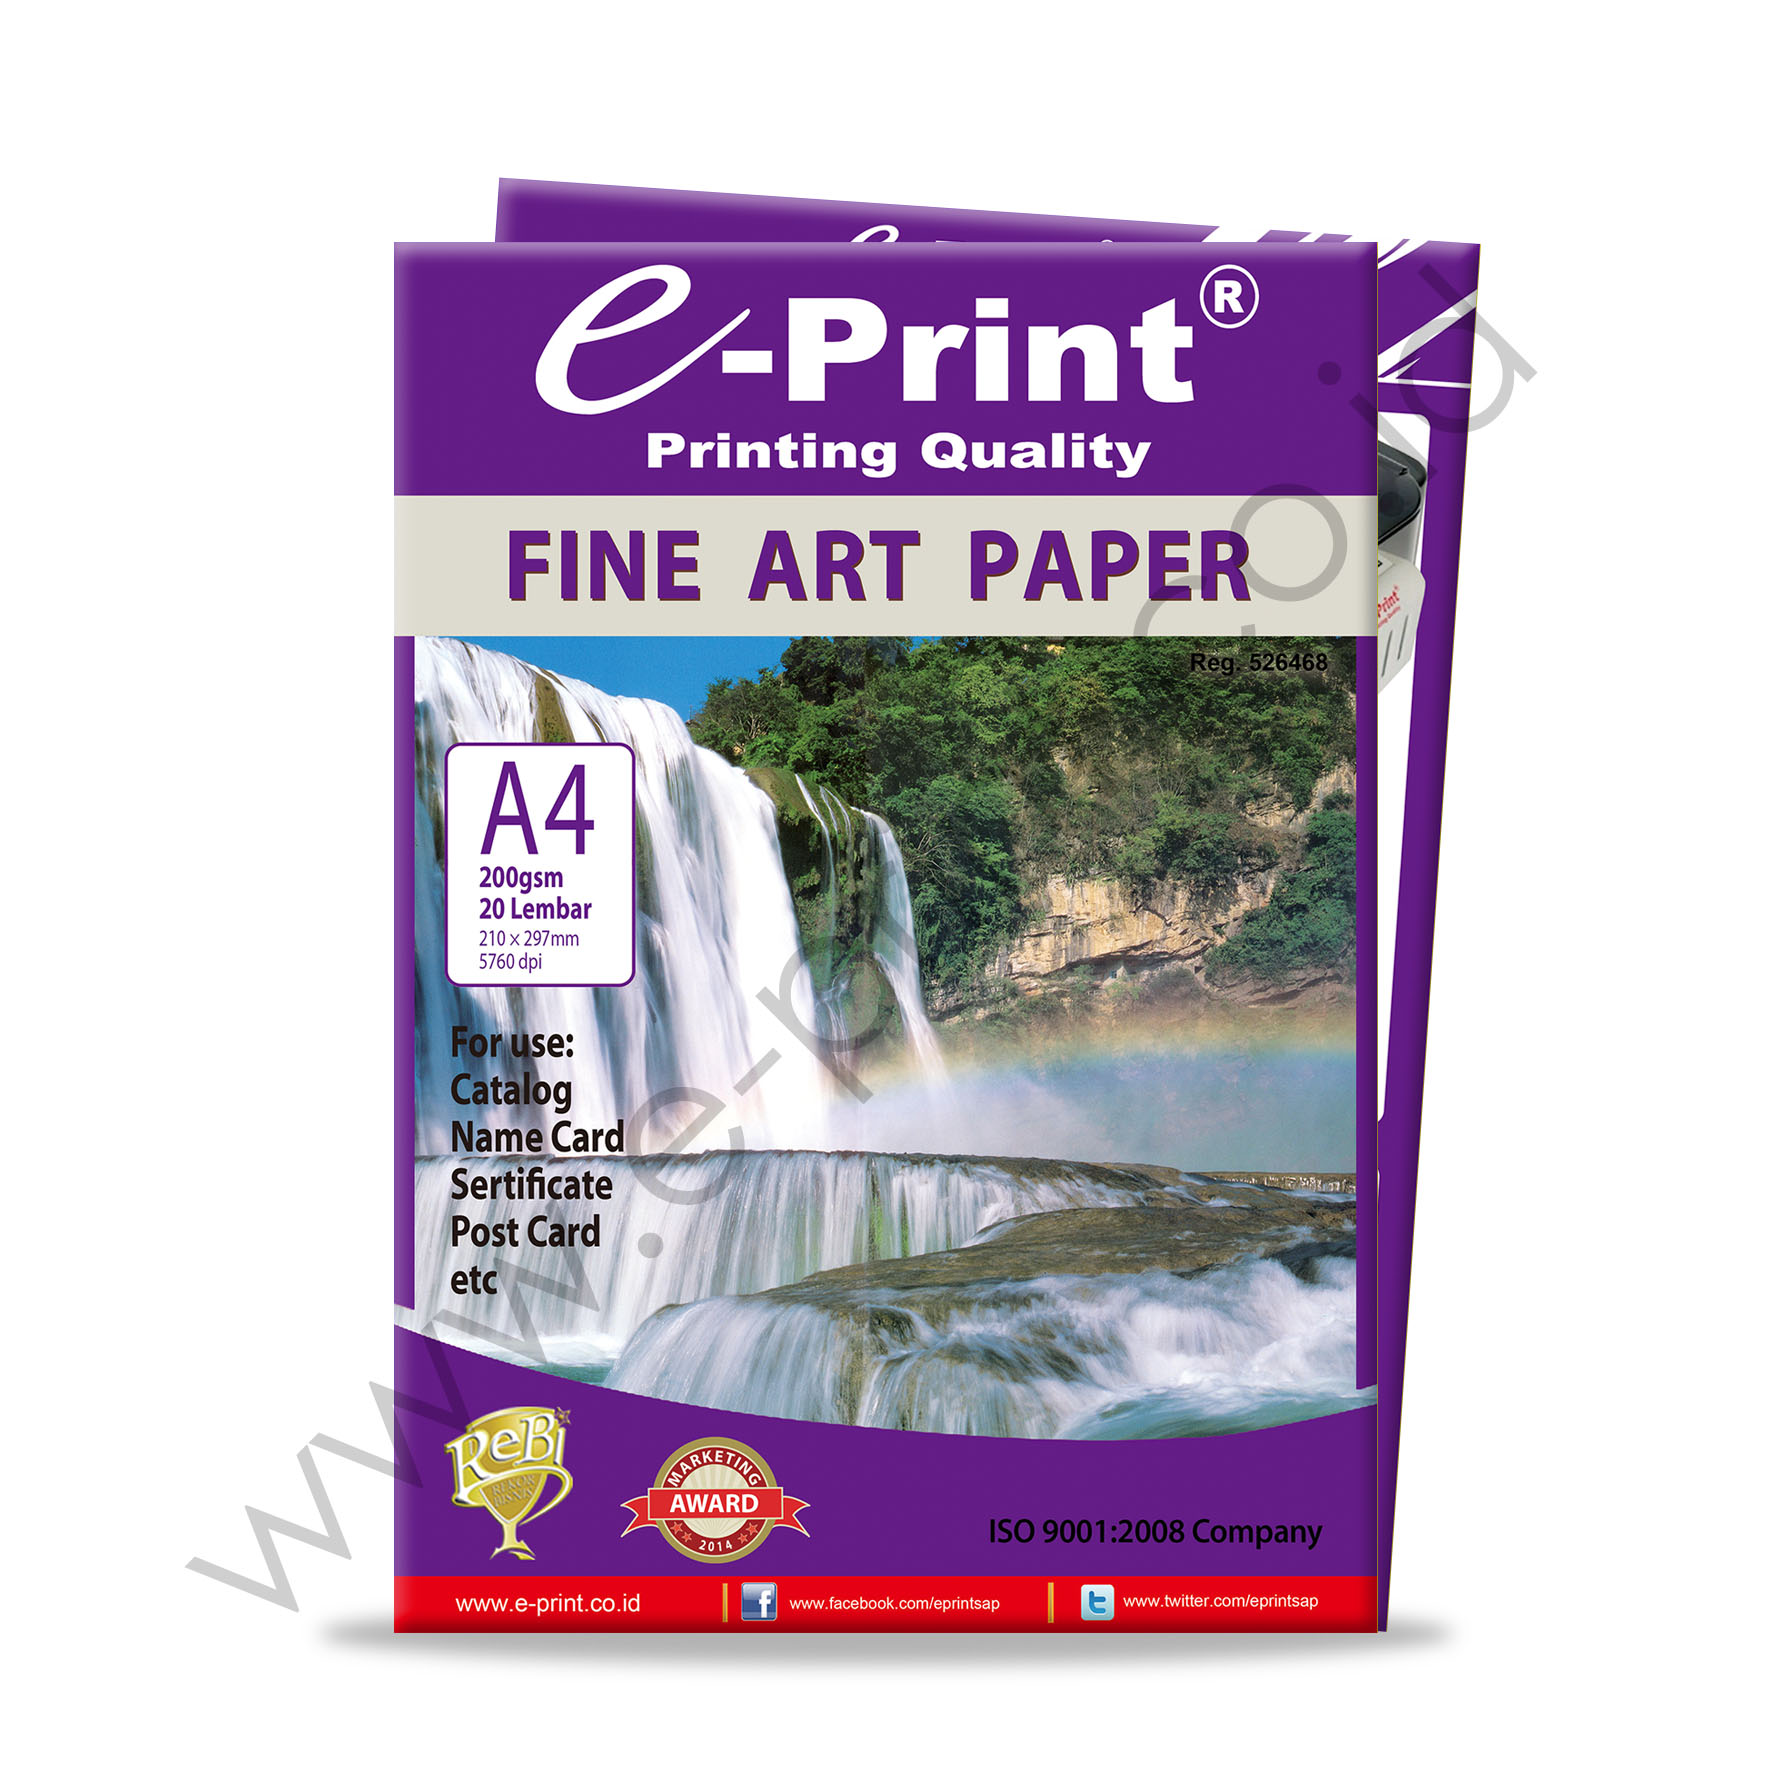 Fine Art Paper A4 200gsm  EPrint Indonesia